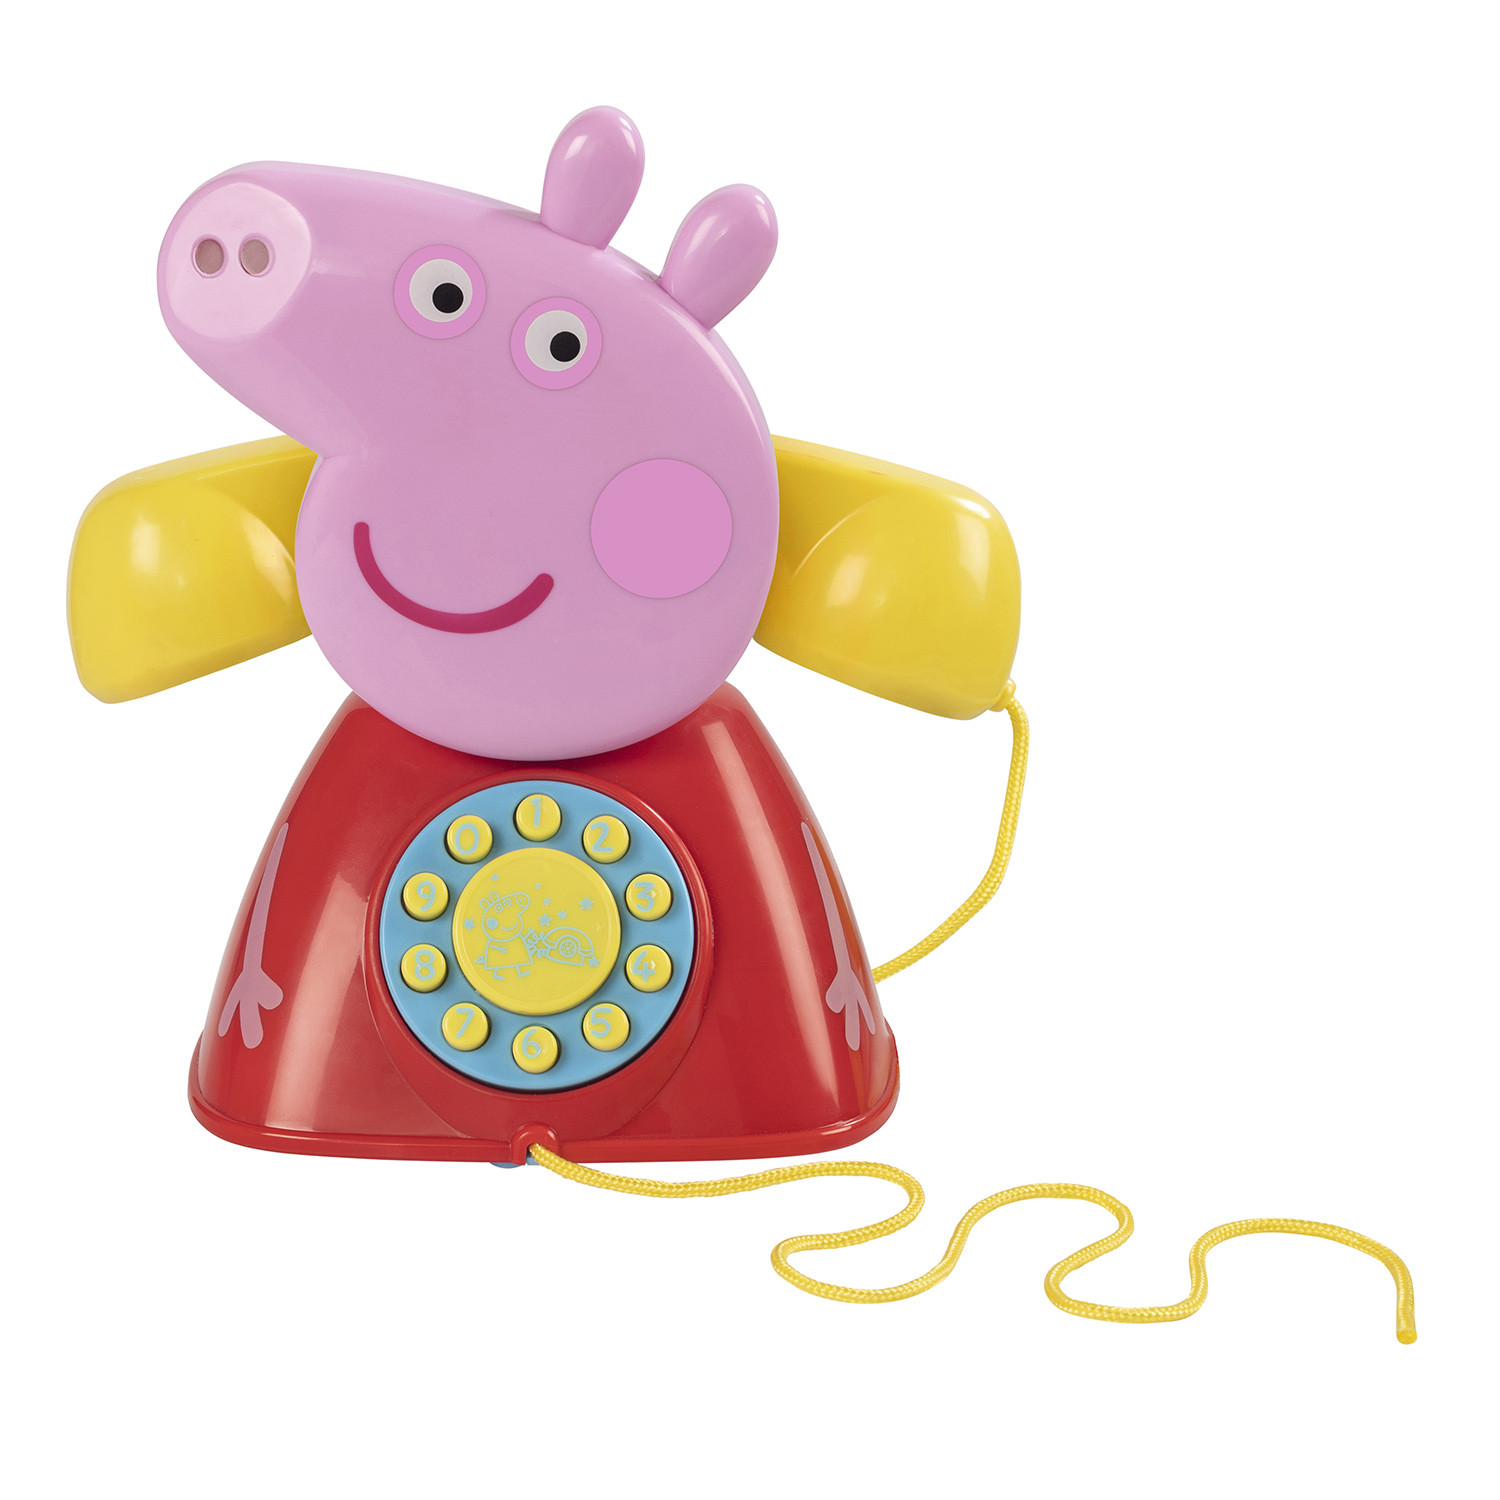 Peppa's Telephone1 Image 2